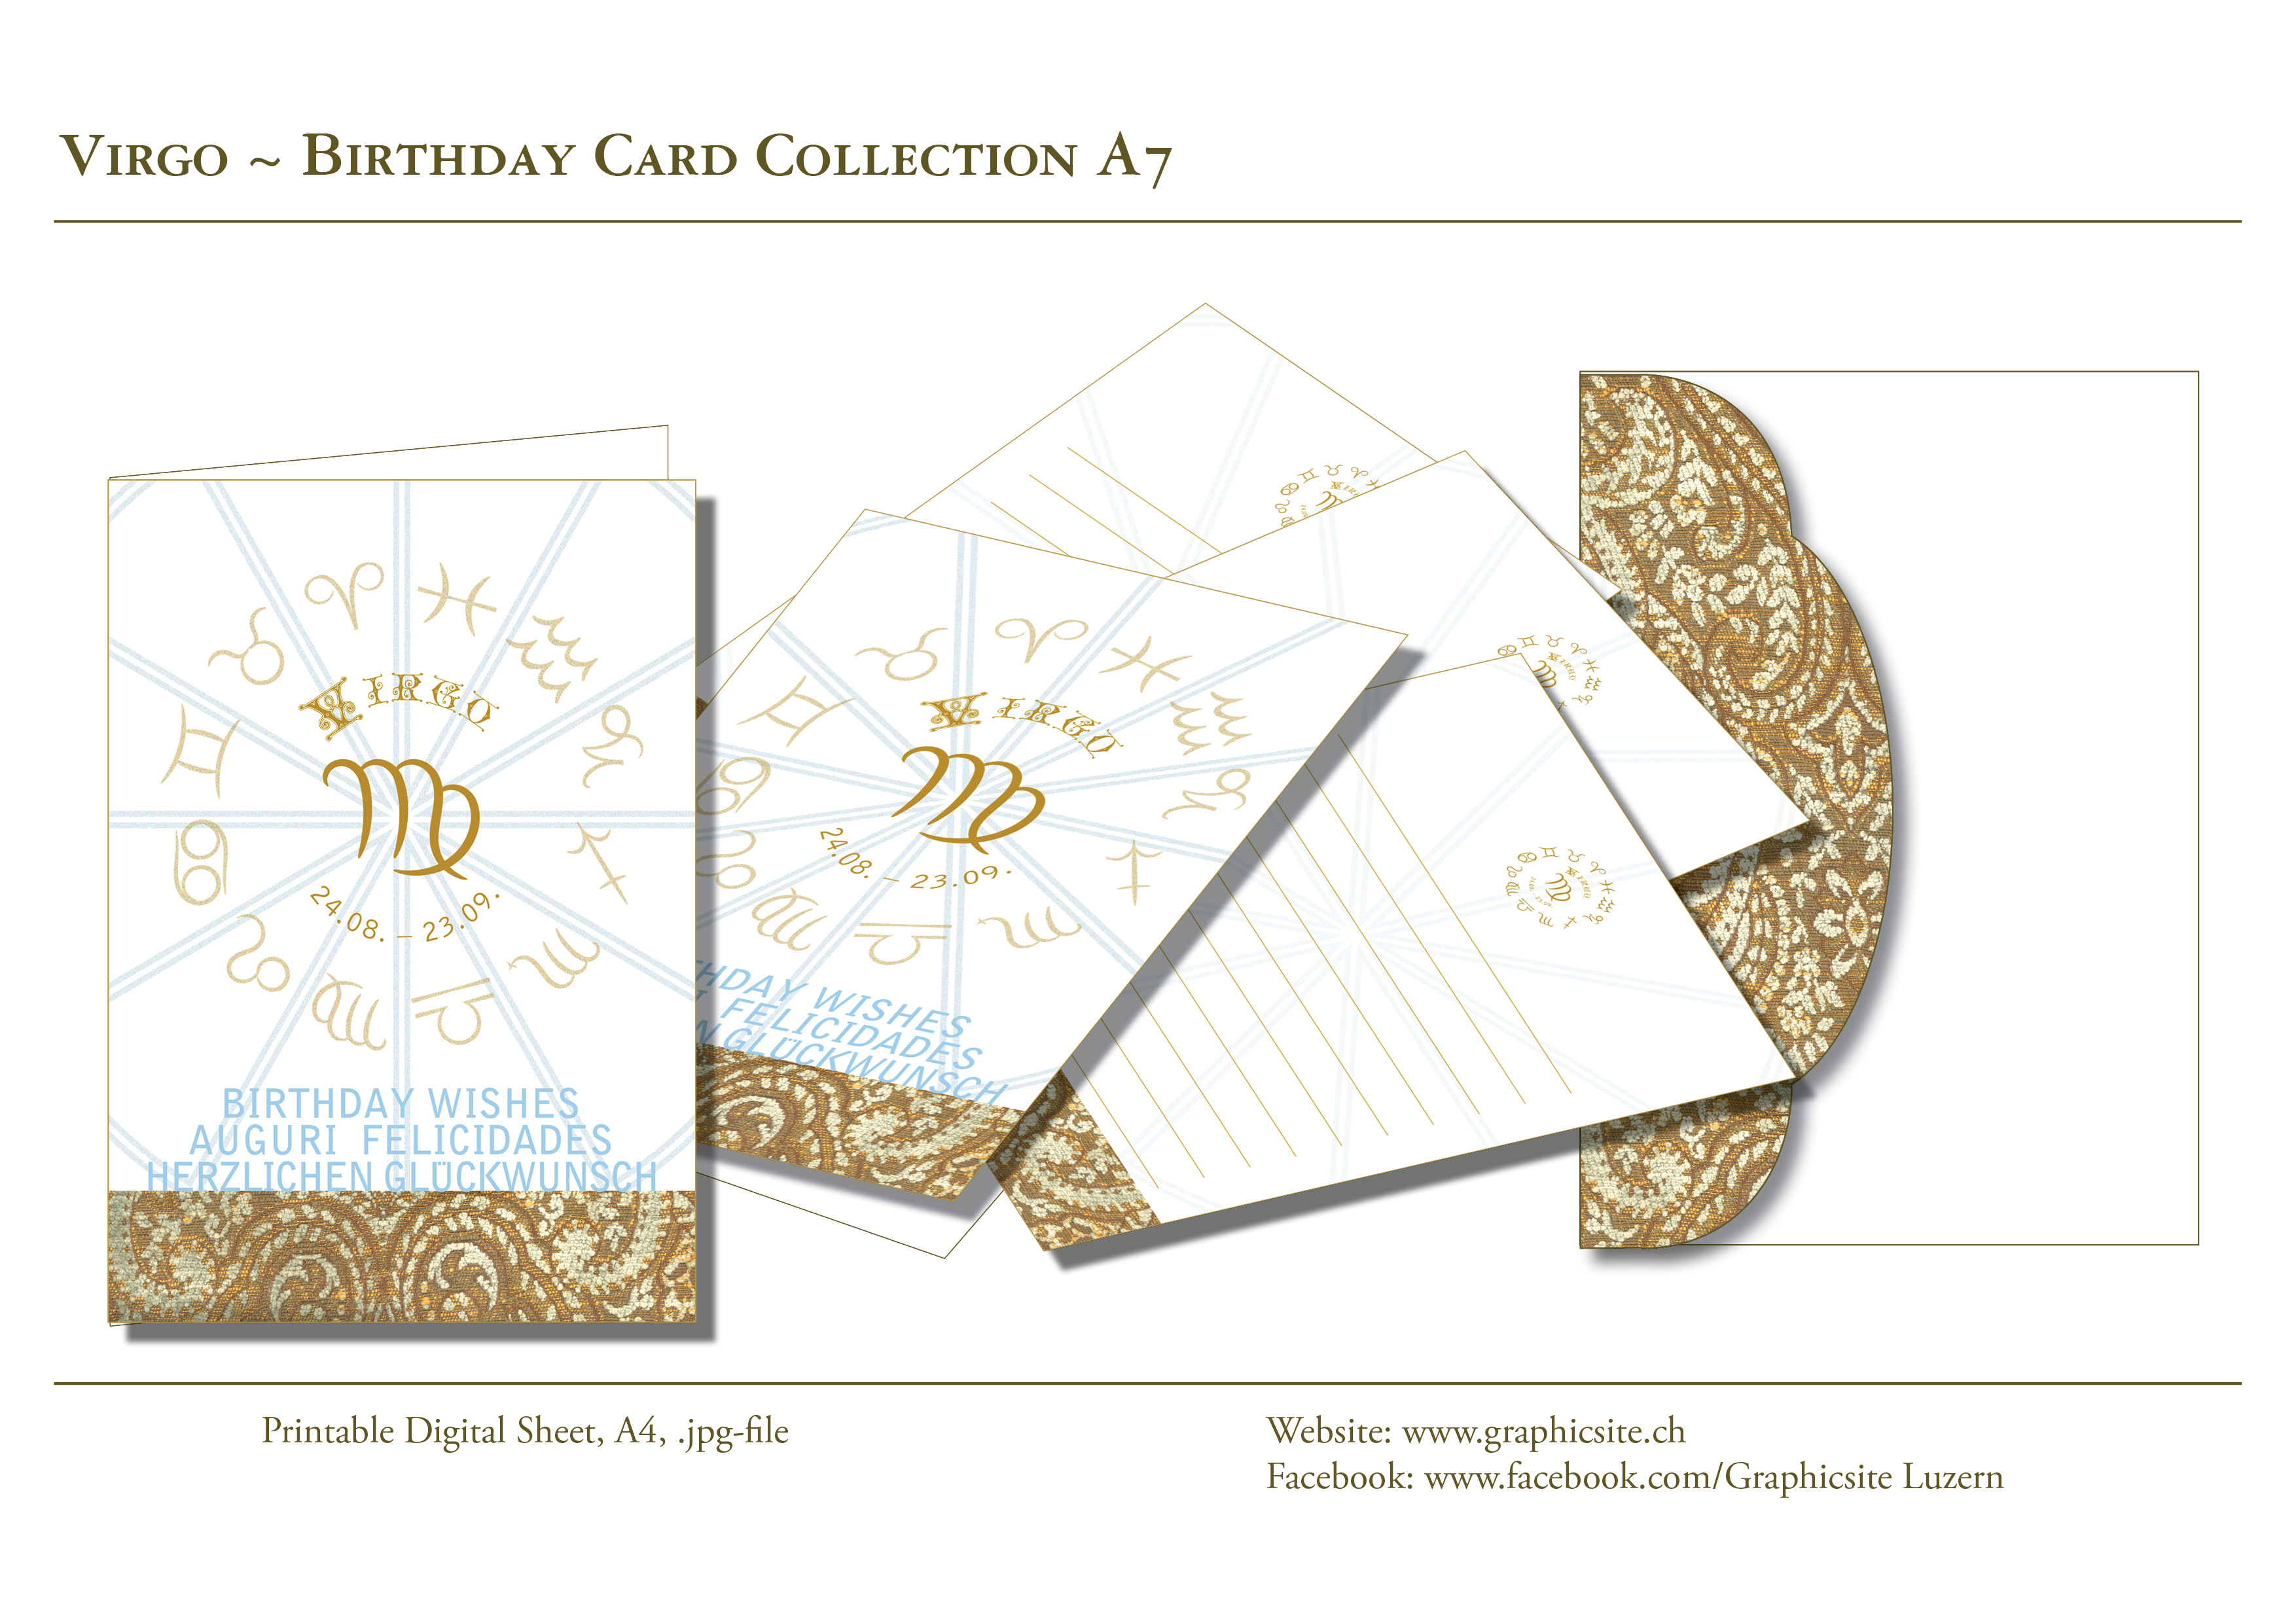 Printable Digital Sheets - Birthday Card Collection - Horoscope - Zodiac - Virgo A7 - GraphicDesign, Luzern